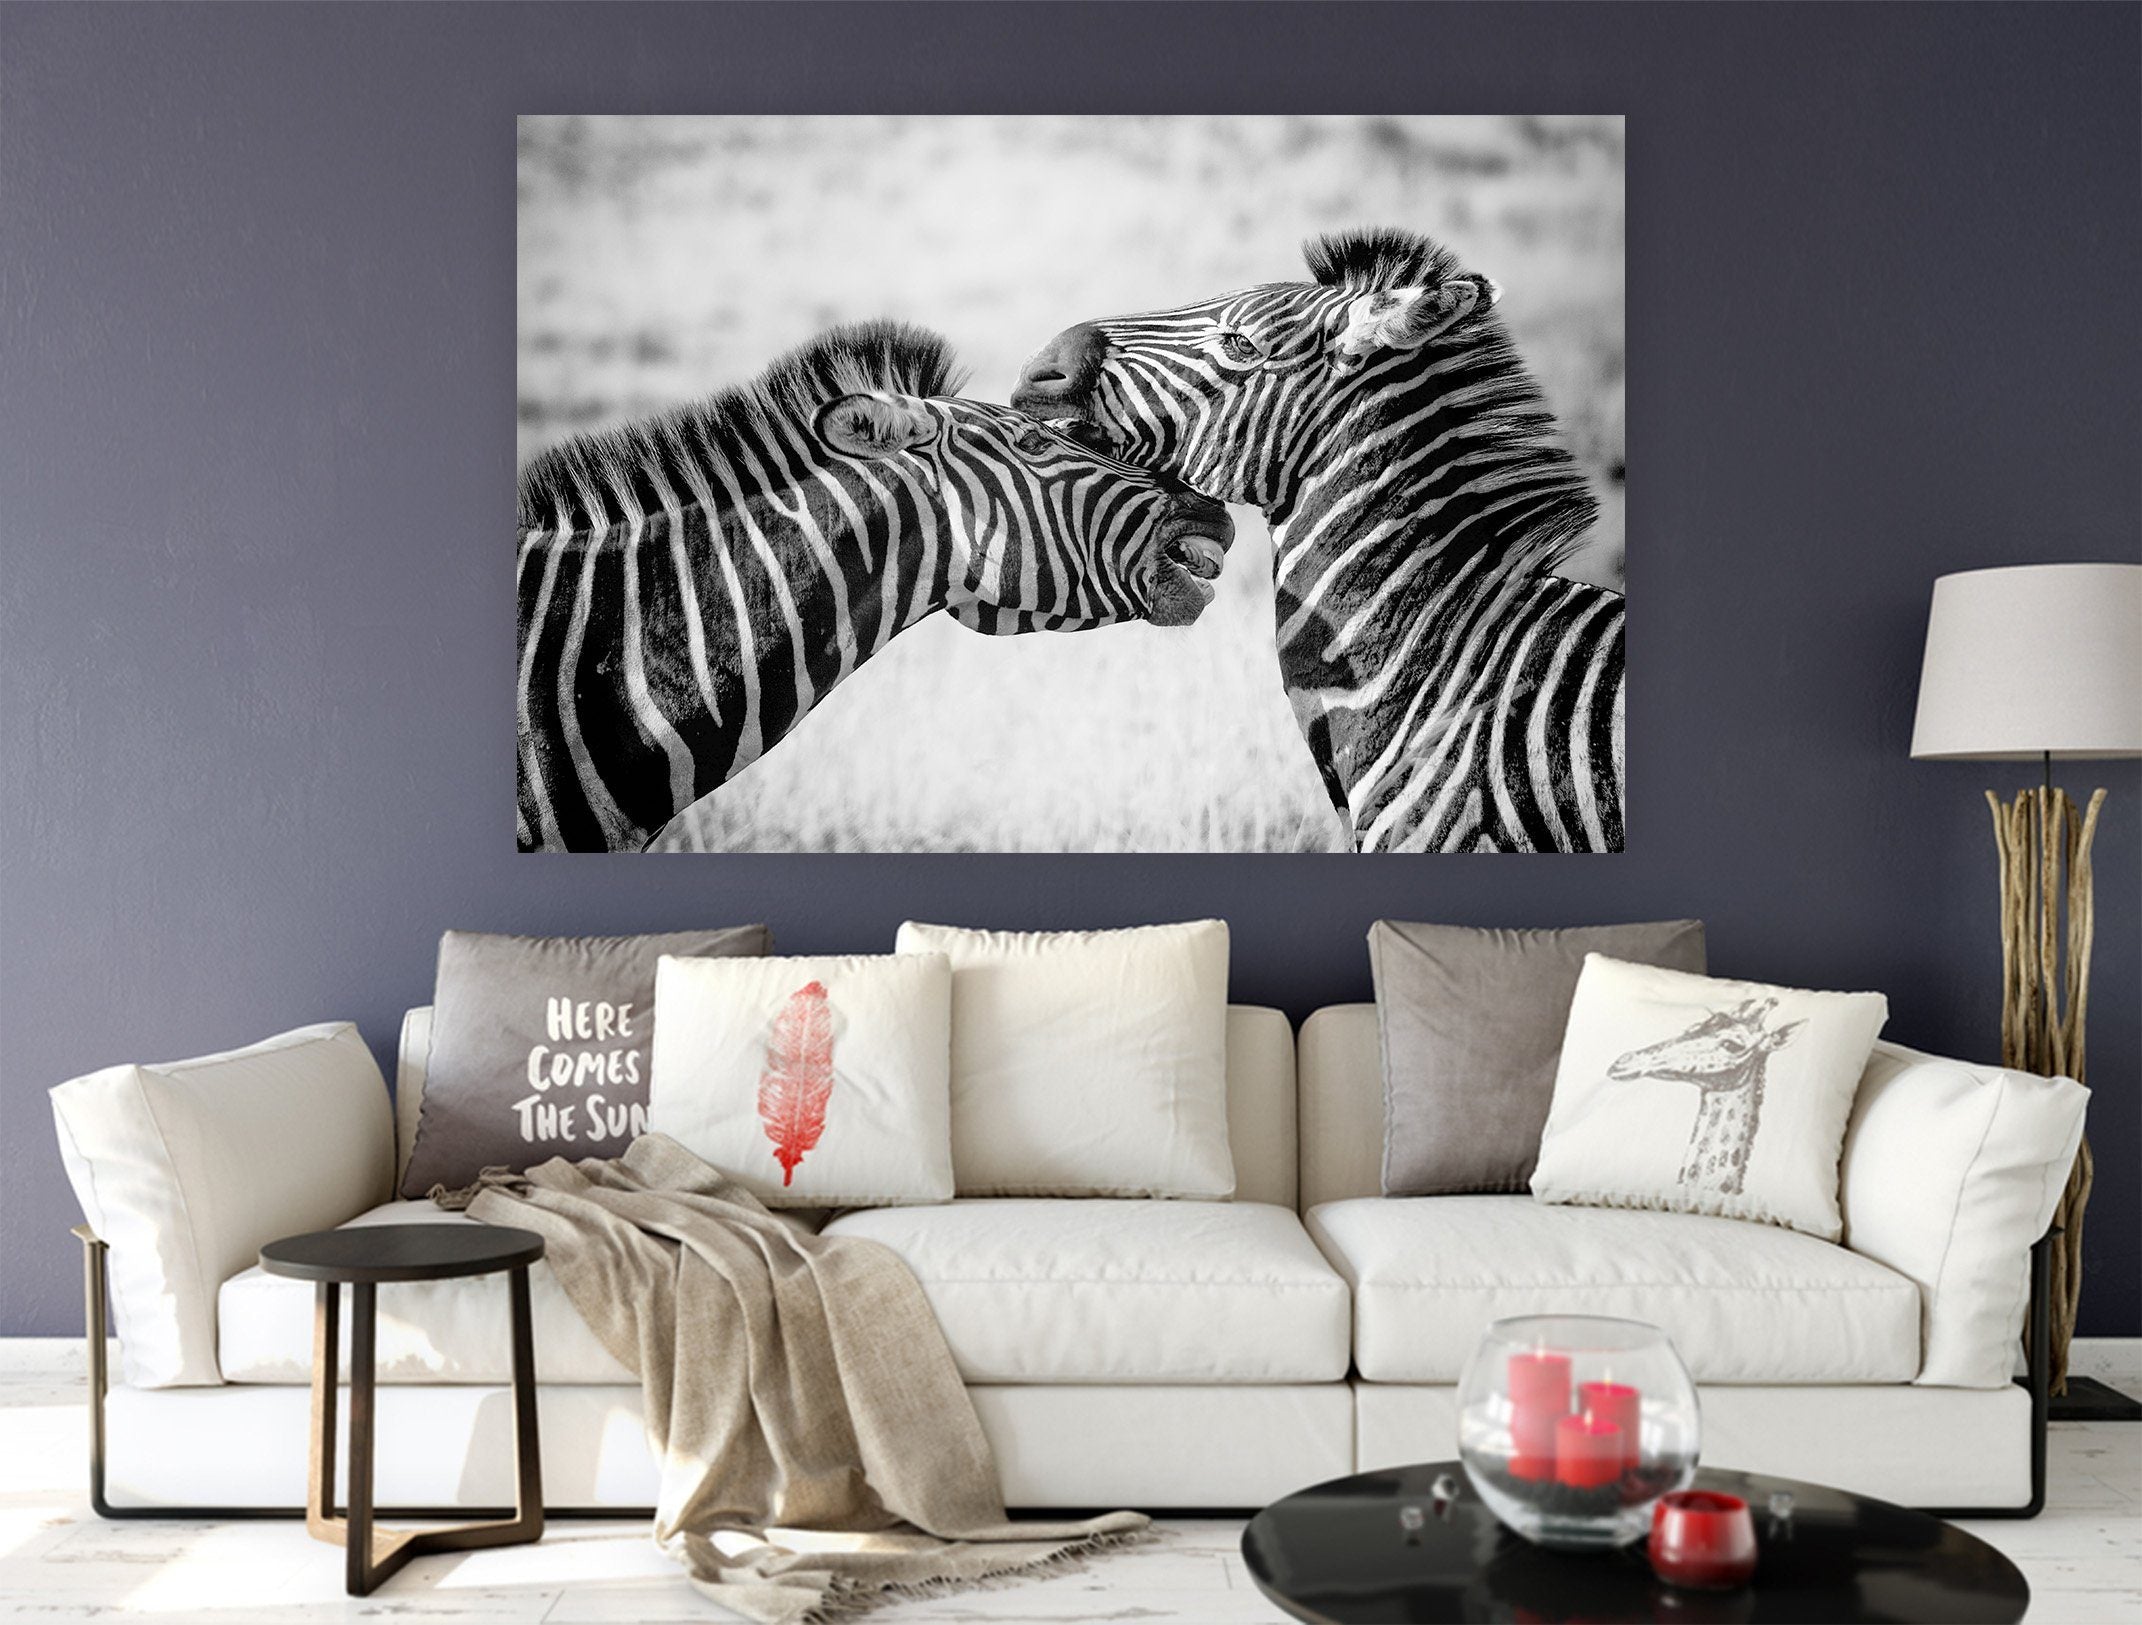 3D Zebra Stripes 134 Animal Wall Stickers Wallpaper AJ Wallpaper 2 